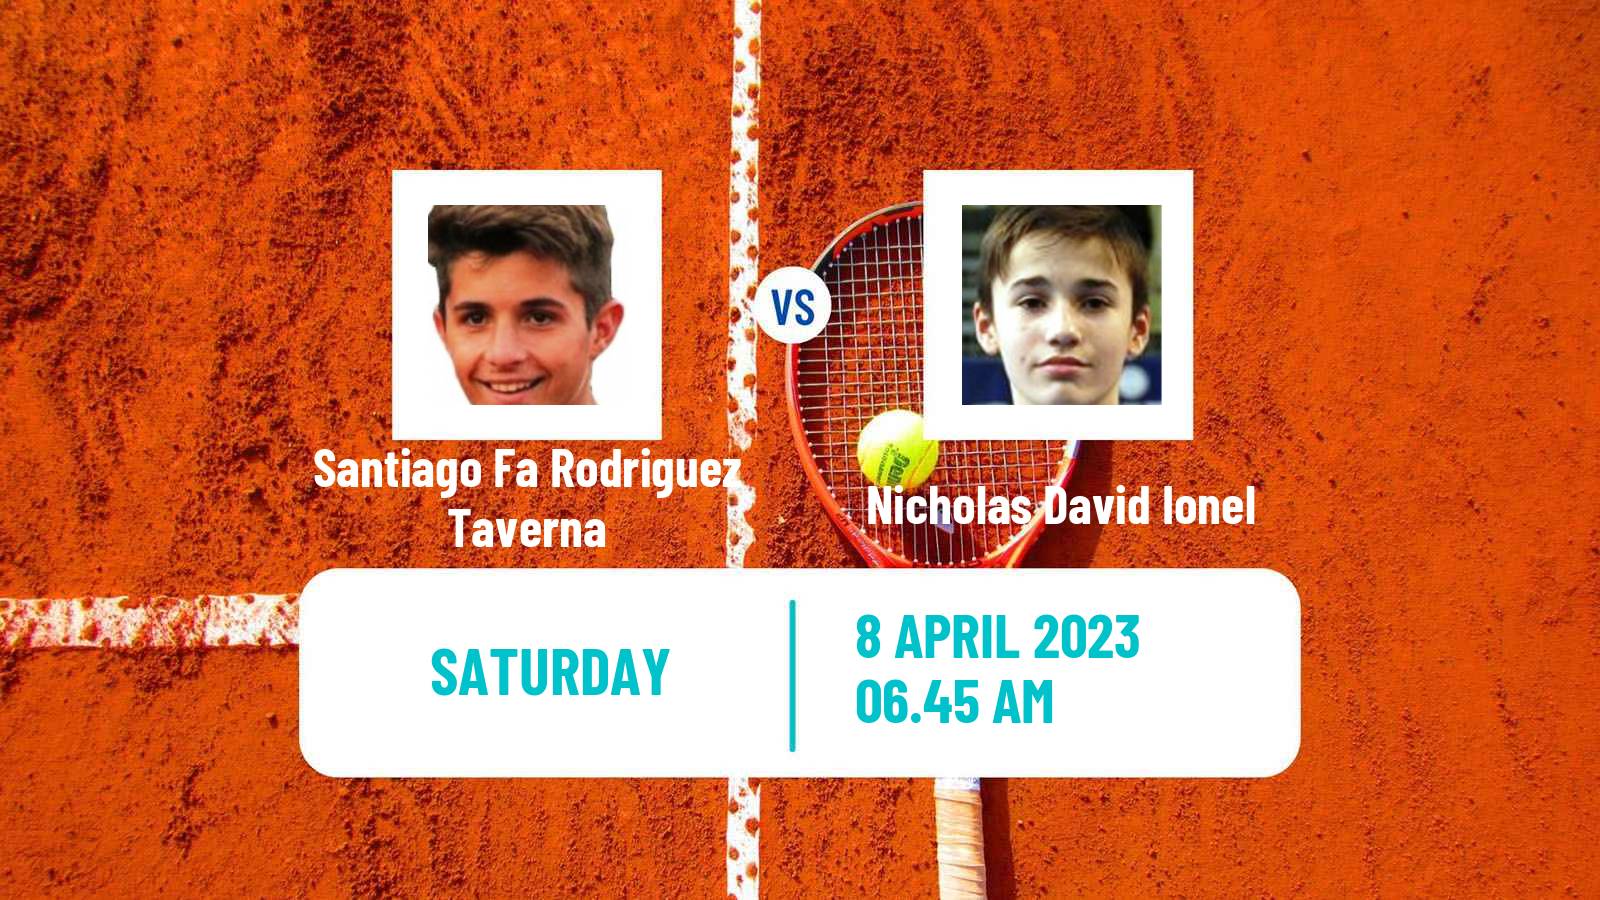 Tennis ATP Challenger Santiago Fa Rodriguez Taverna - Nicholas David Ionel